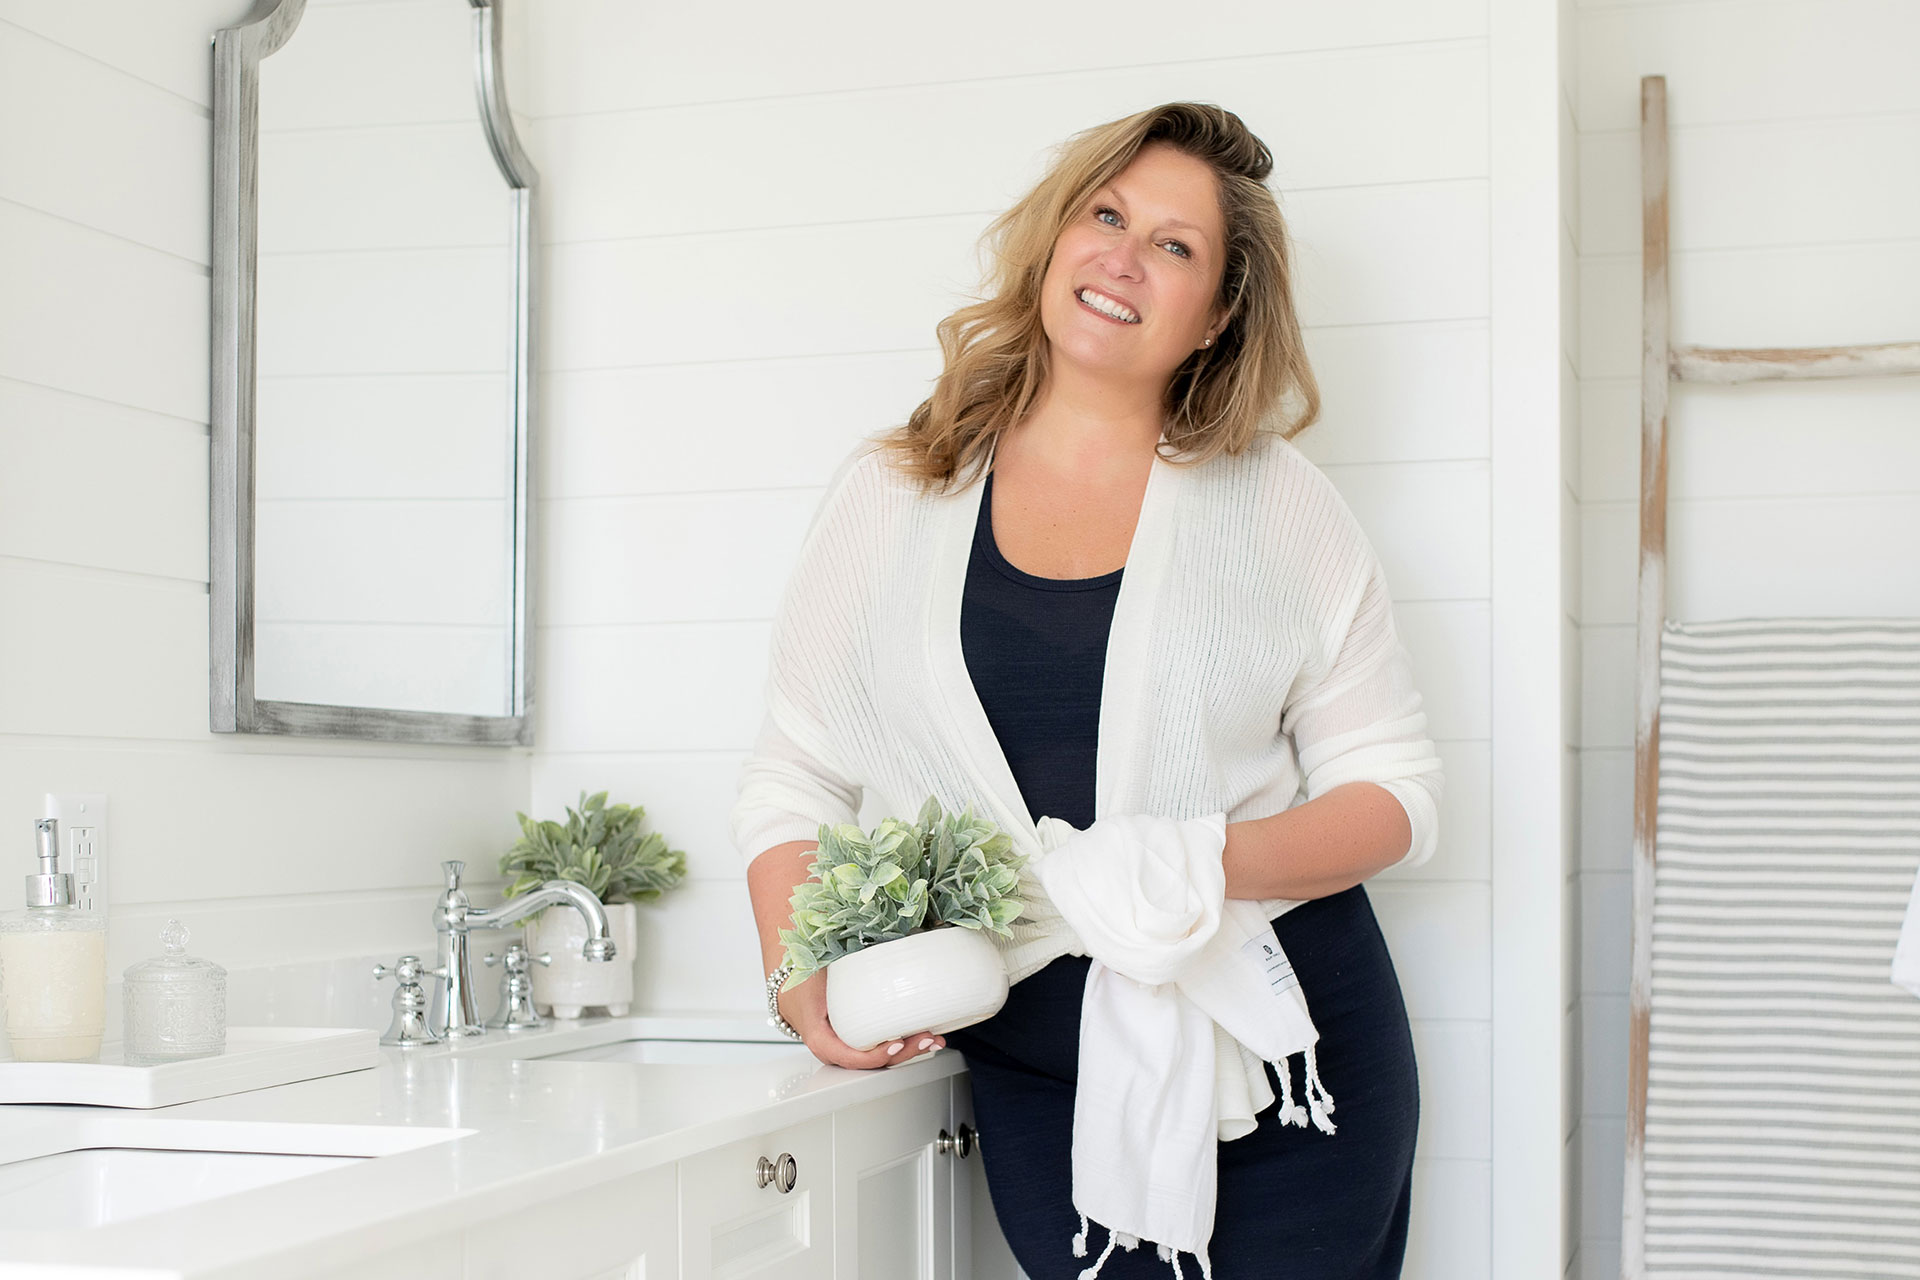 Made-to-measure bathrooms vanity for Saskia Thuot